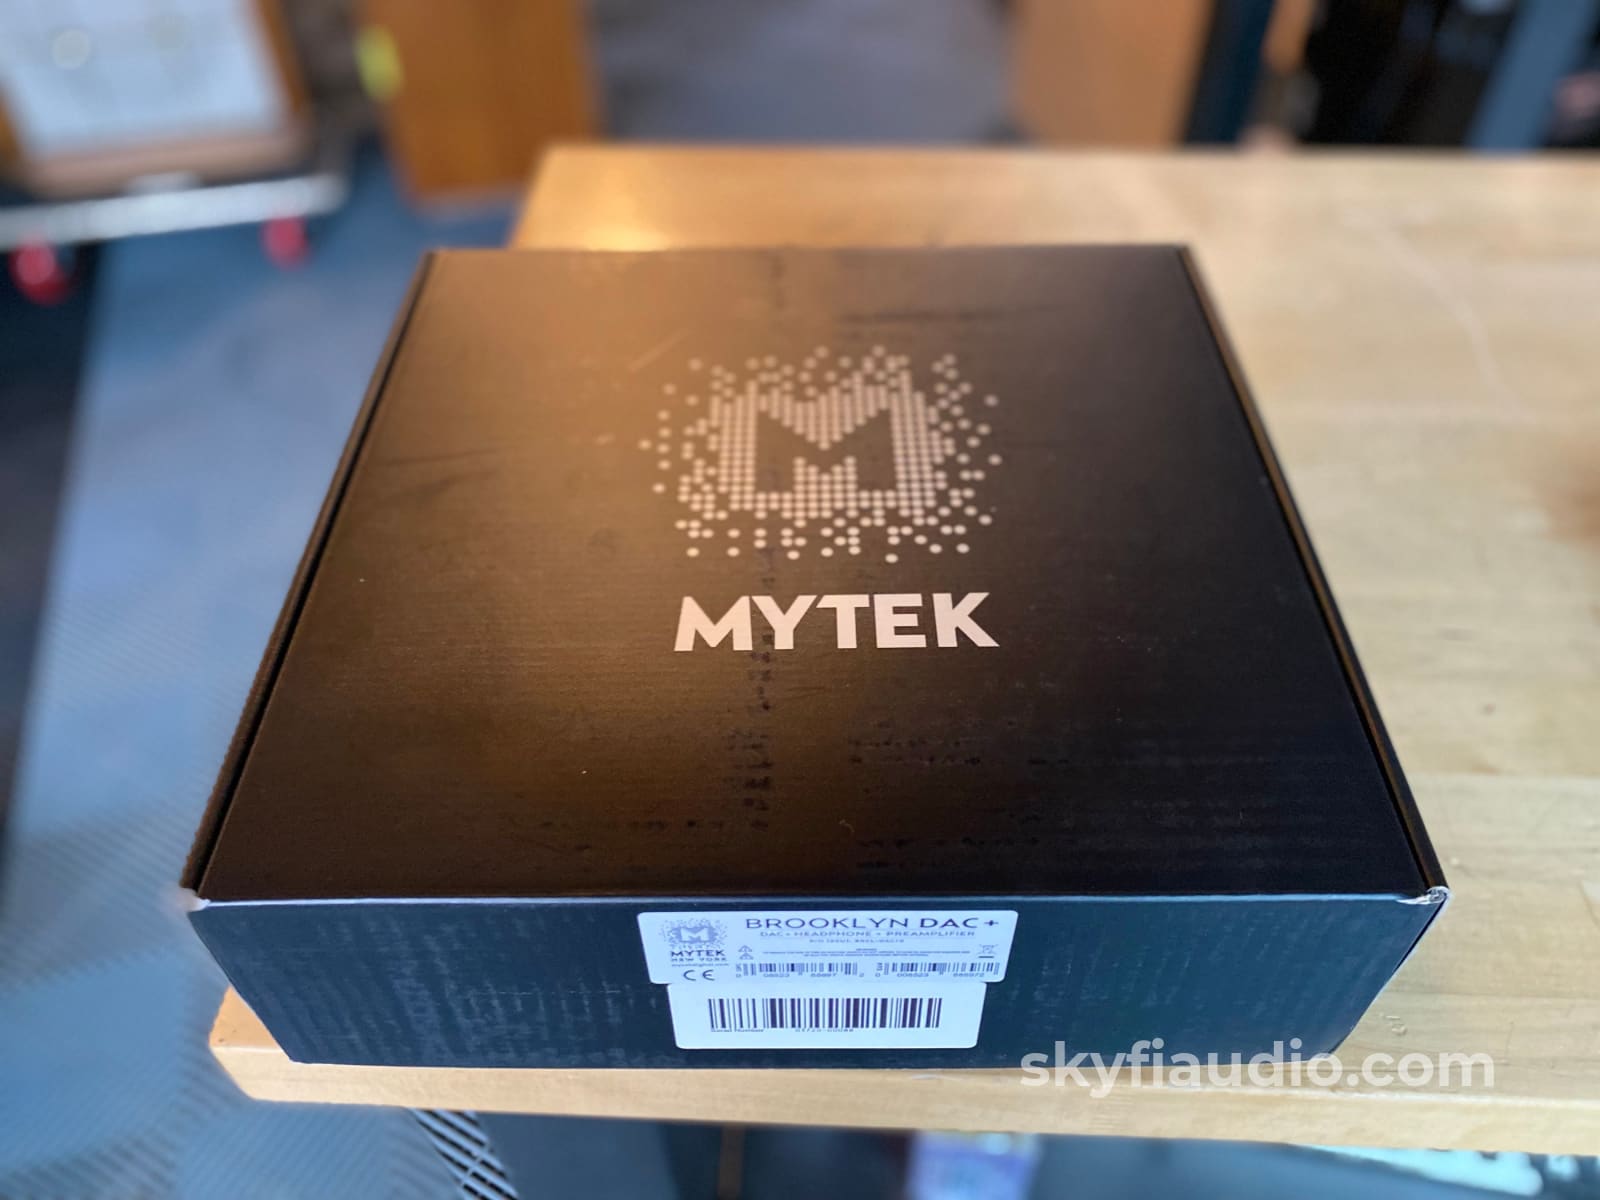 Mytek Brooklyn Dac+ Stereophile Class A - Complete Set Cd + Digital